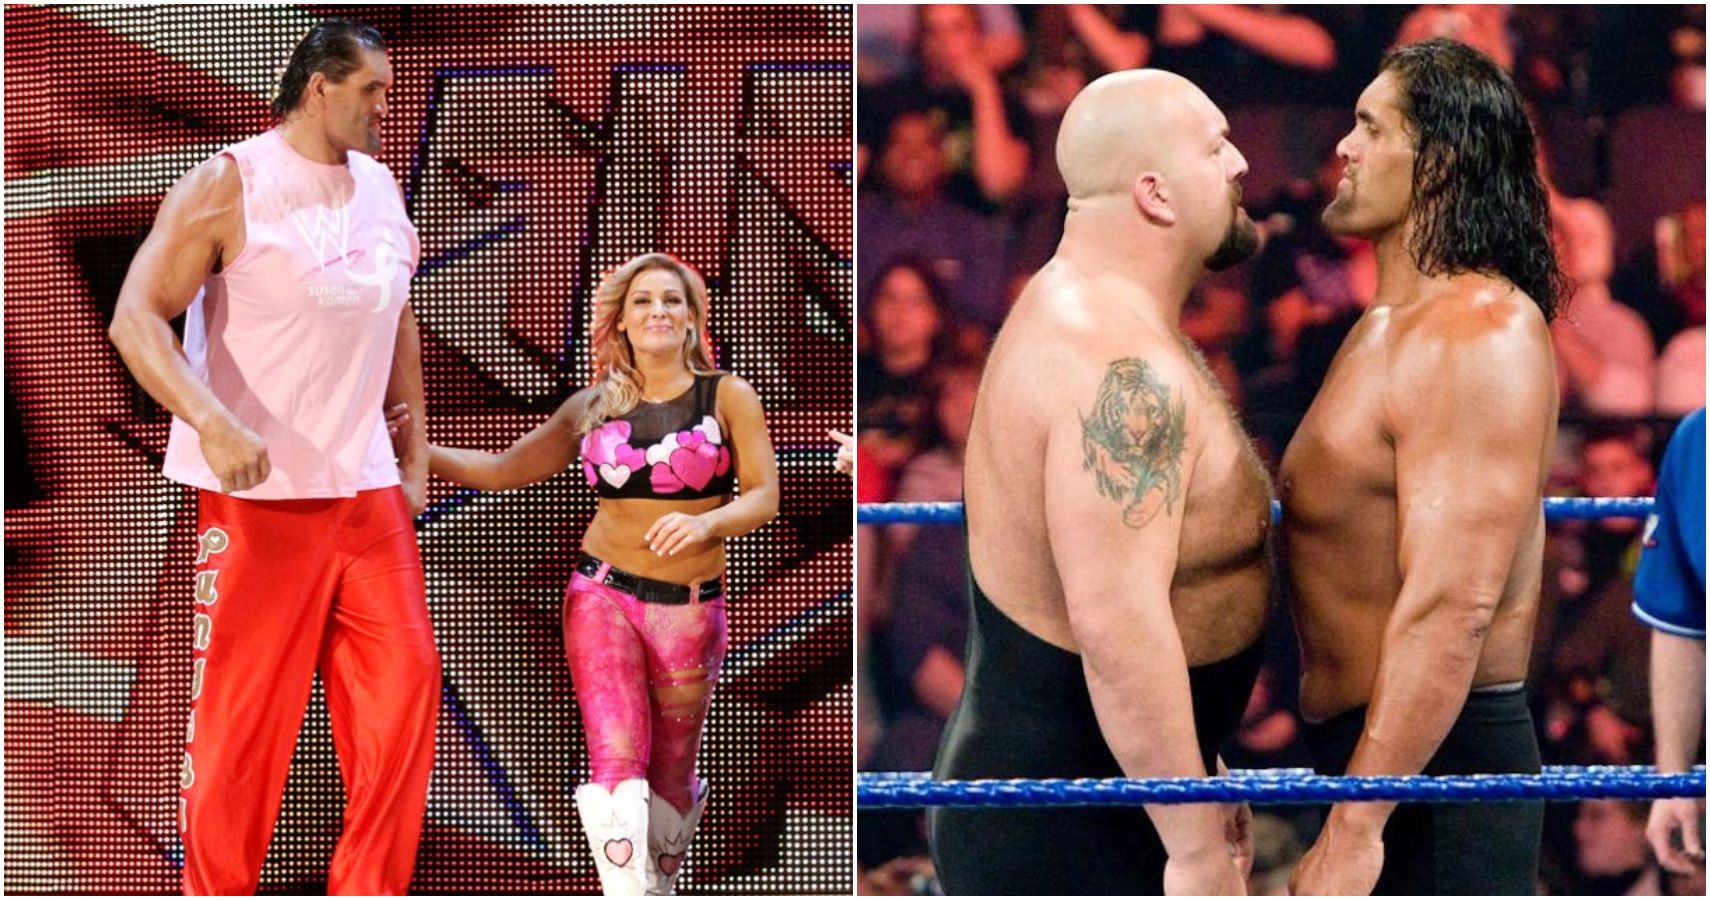 The Great Khali, Natalya, Big Show